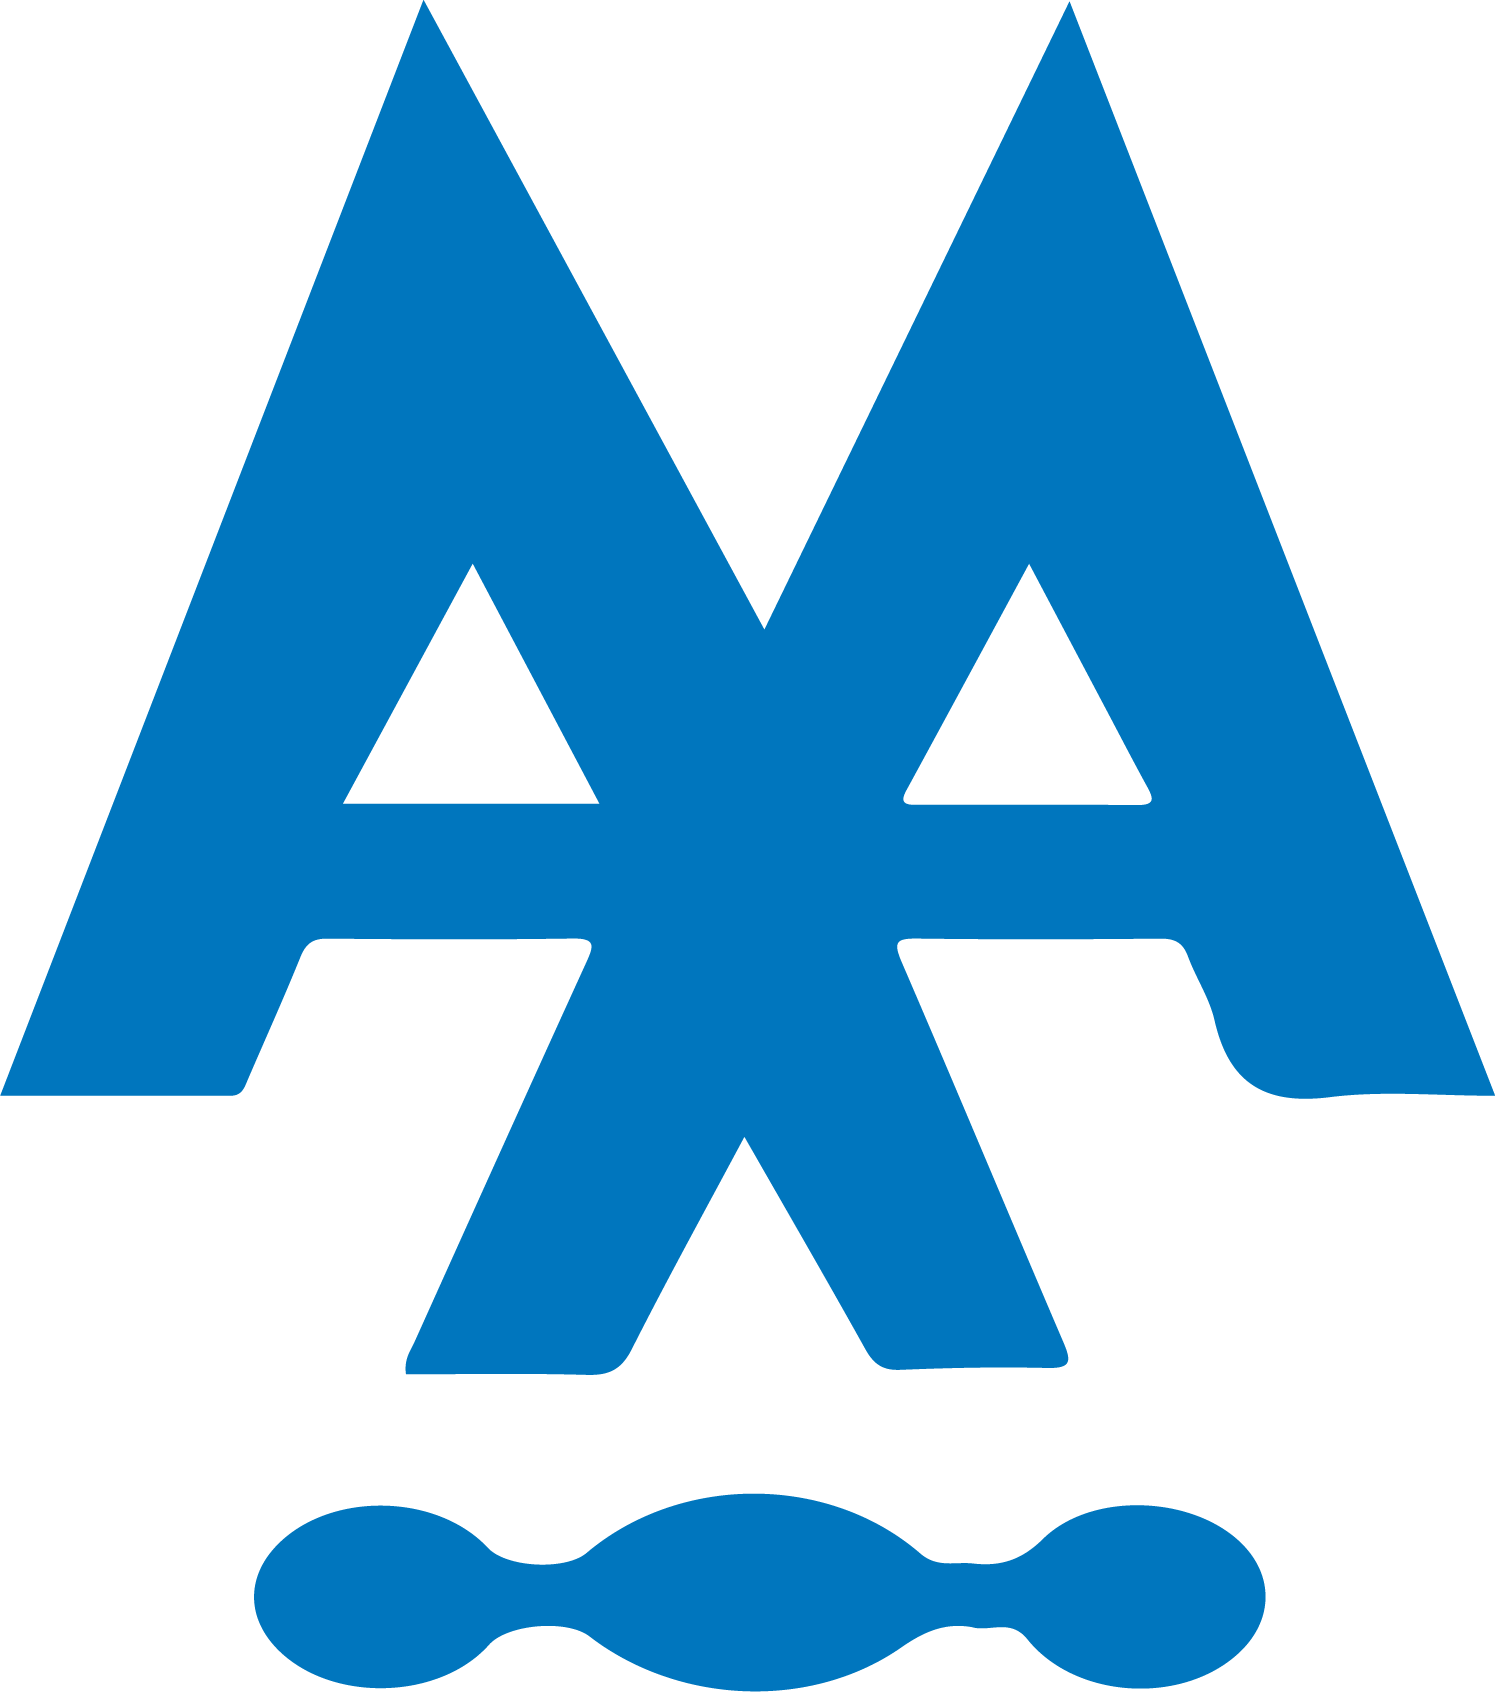 Automotive Axles logo (PNG transparent)